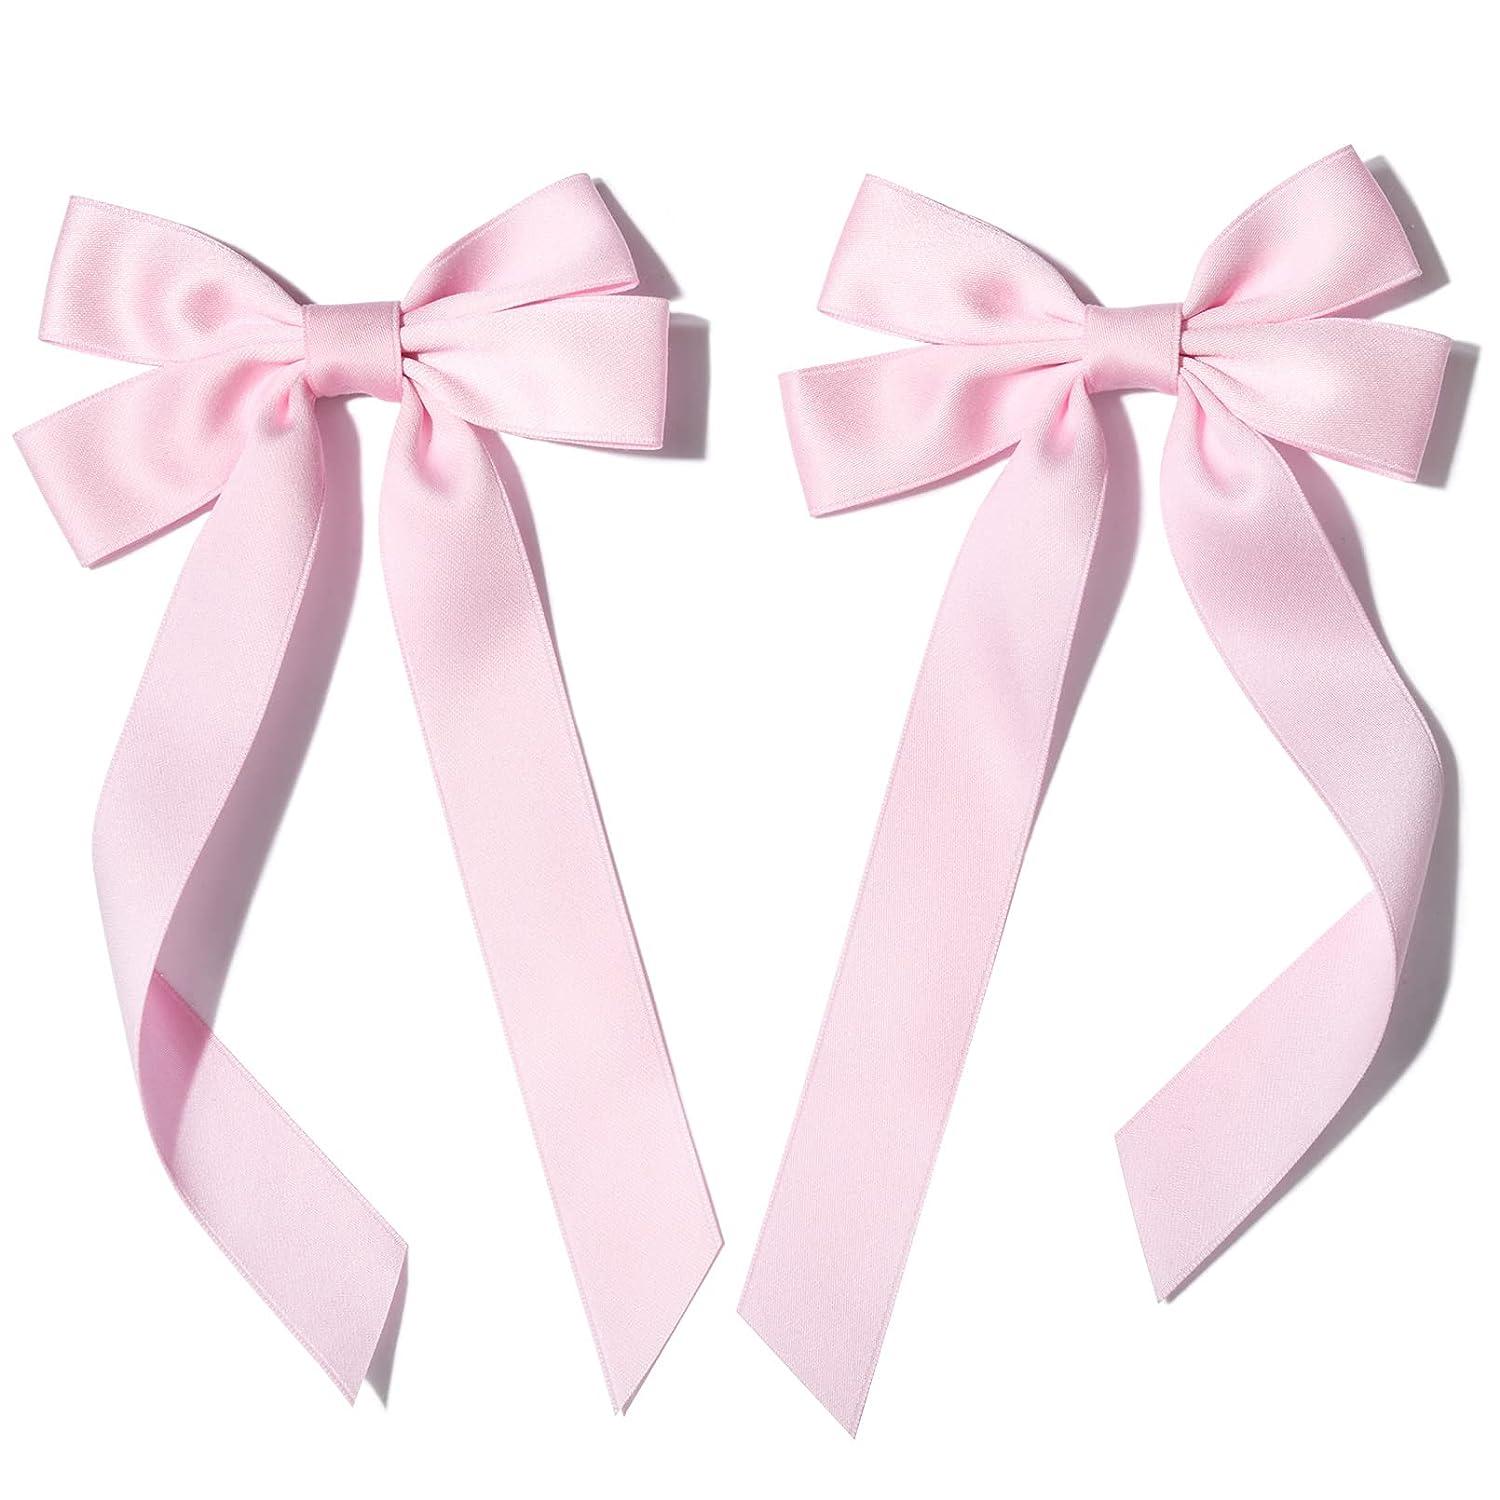 cnhairaccessories Silver Edge Ribbon Hair Bows for Girls Pink